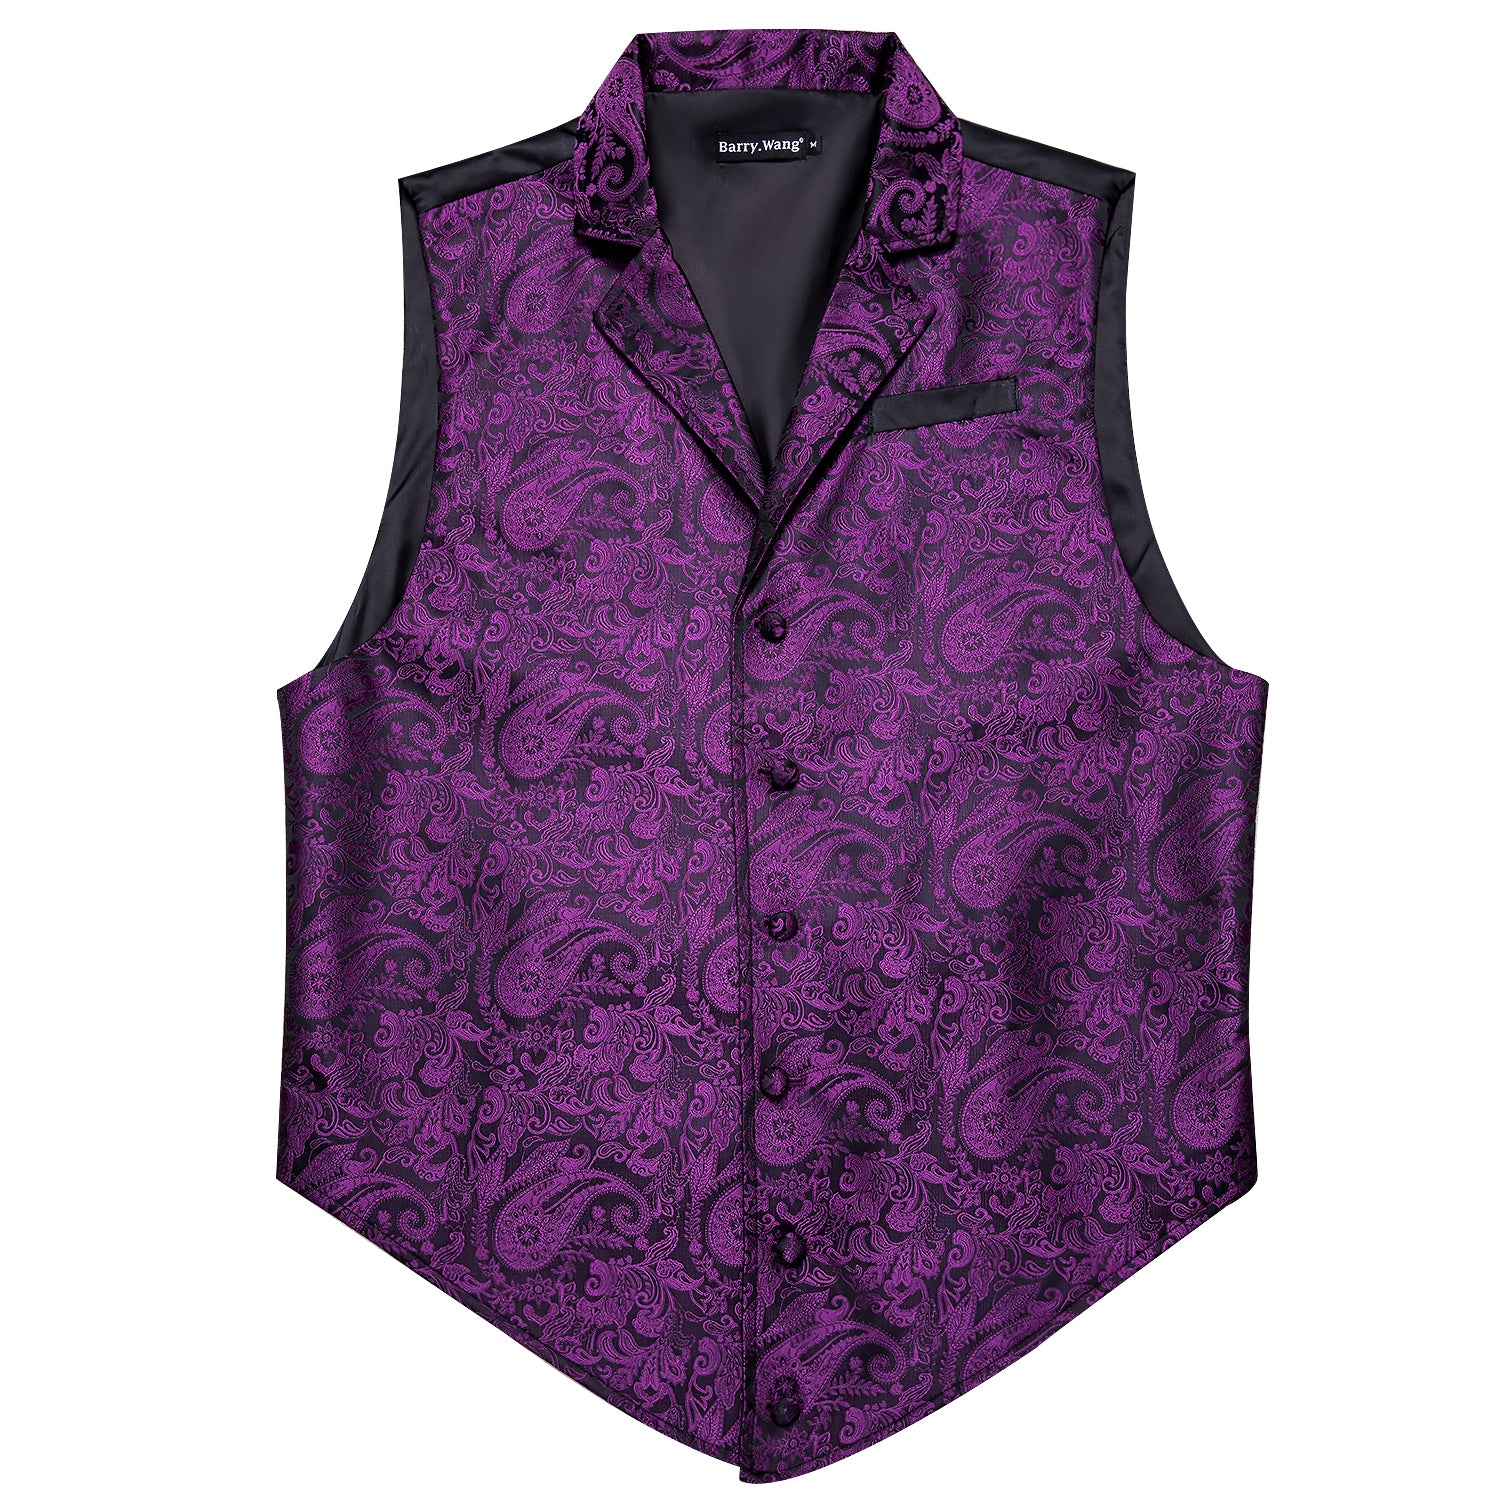 Barry.wang Men's Vest Novelty Purple Paisley Silk Tuxedo Vest Hot